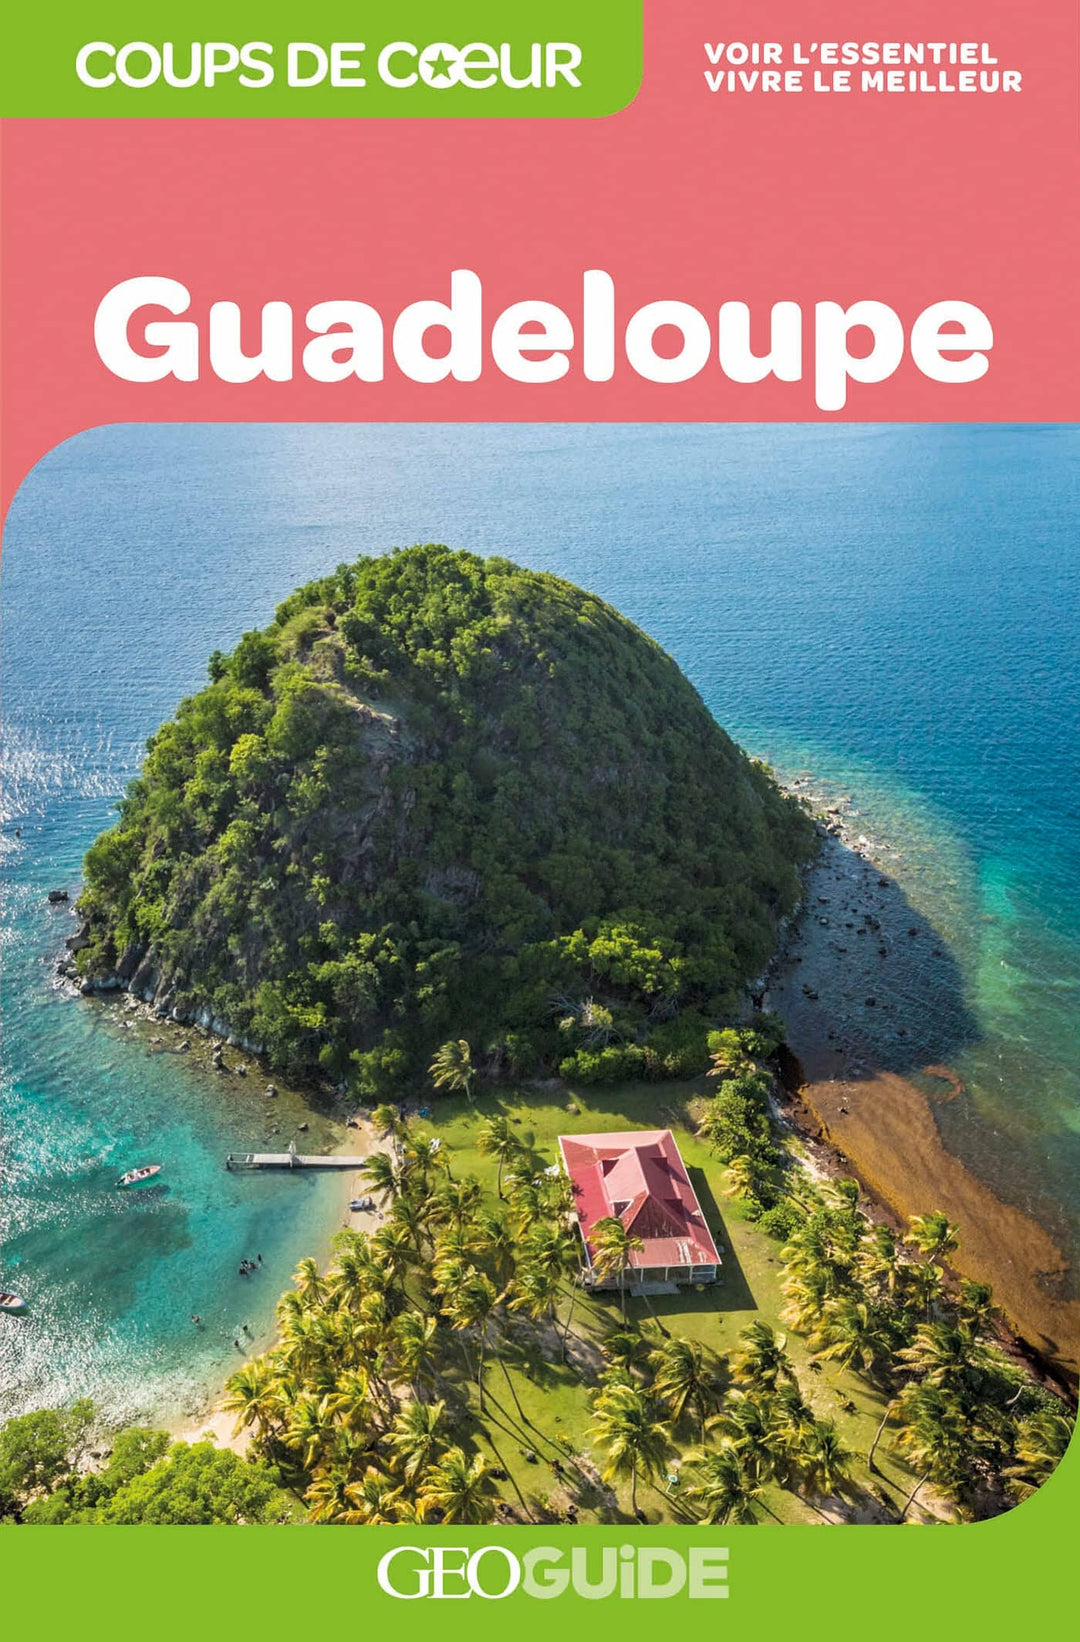 Géoguide (coups de coeur) - Guadeloupe | Gallimard guide de voyage Gallimard 